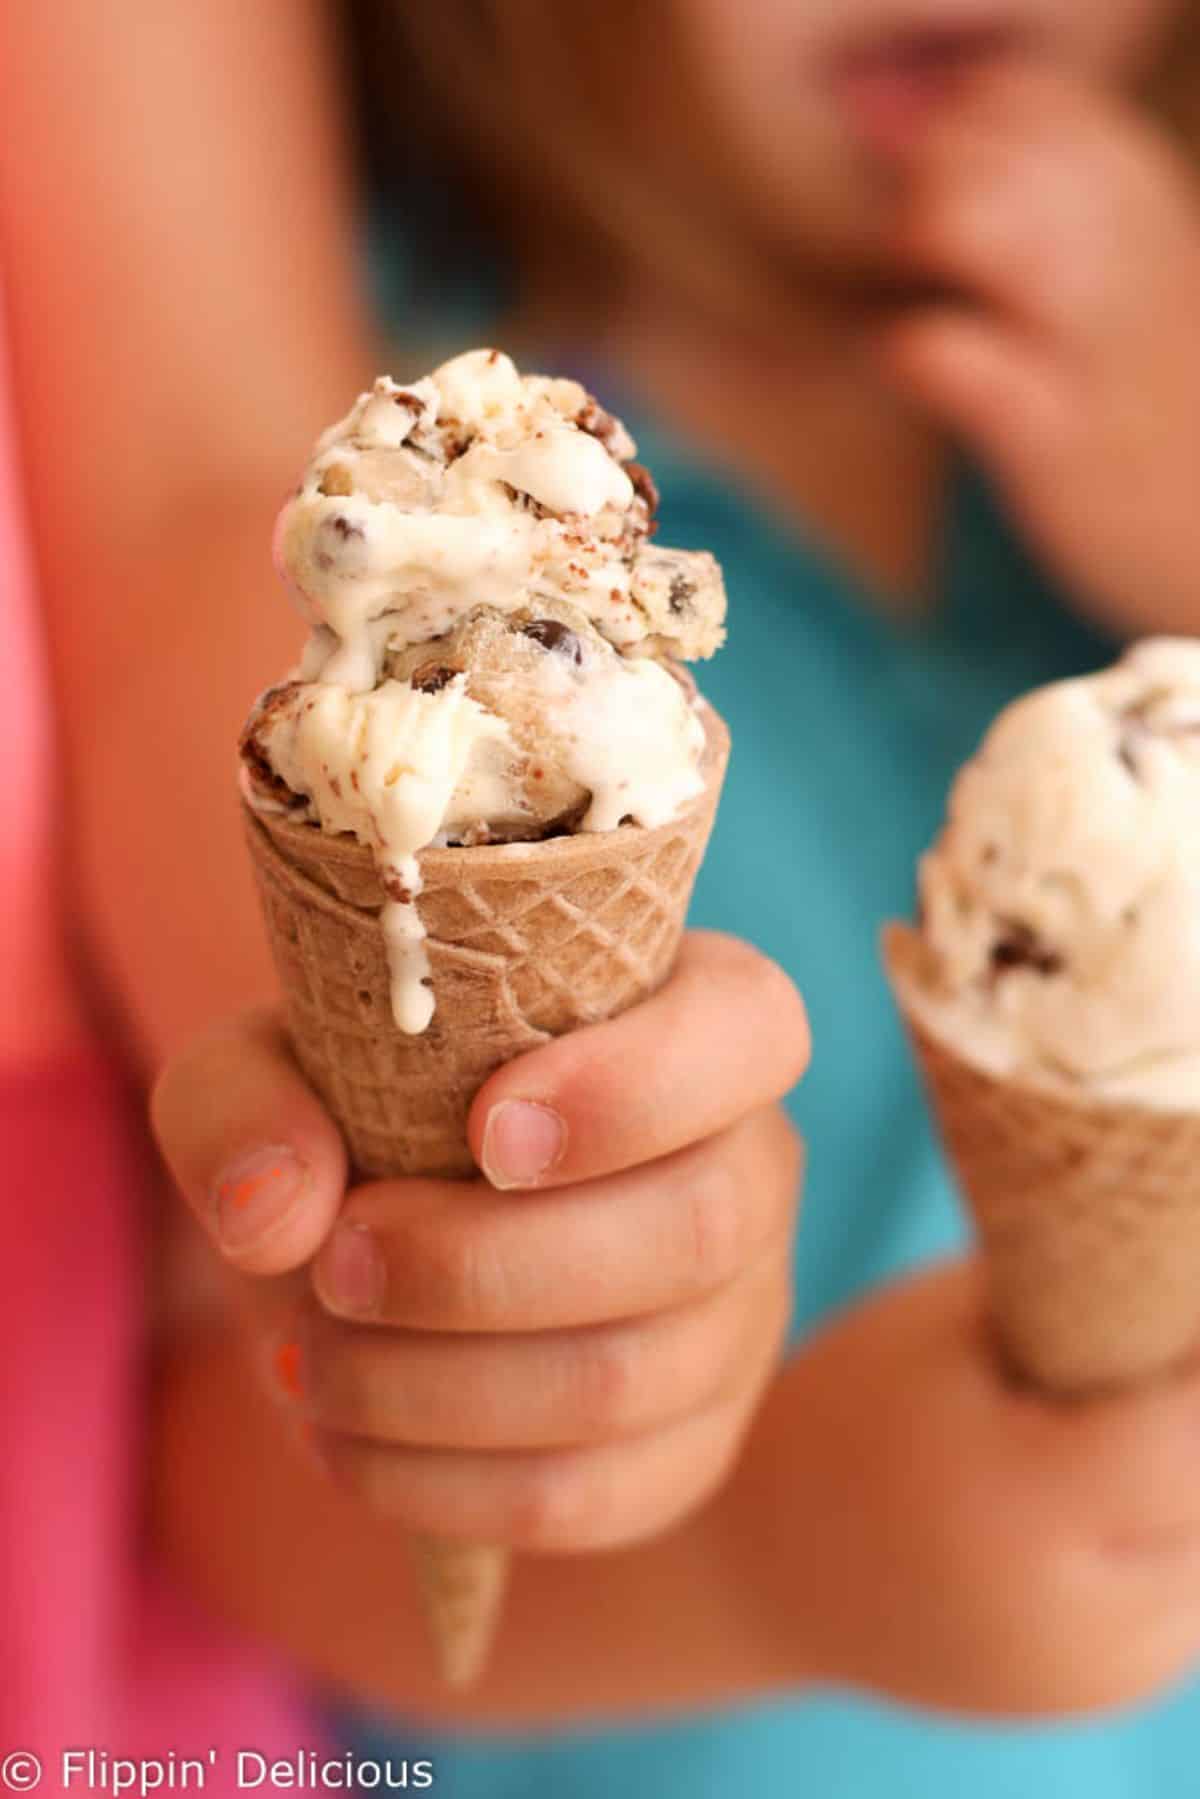 Kids holding No-Churn Ice Cream in cones.